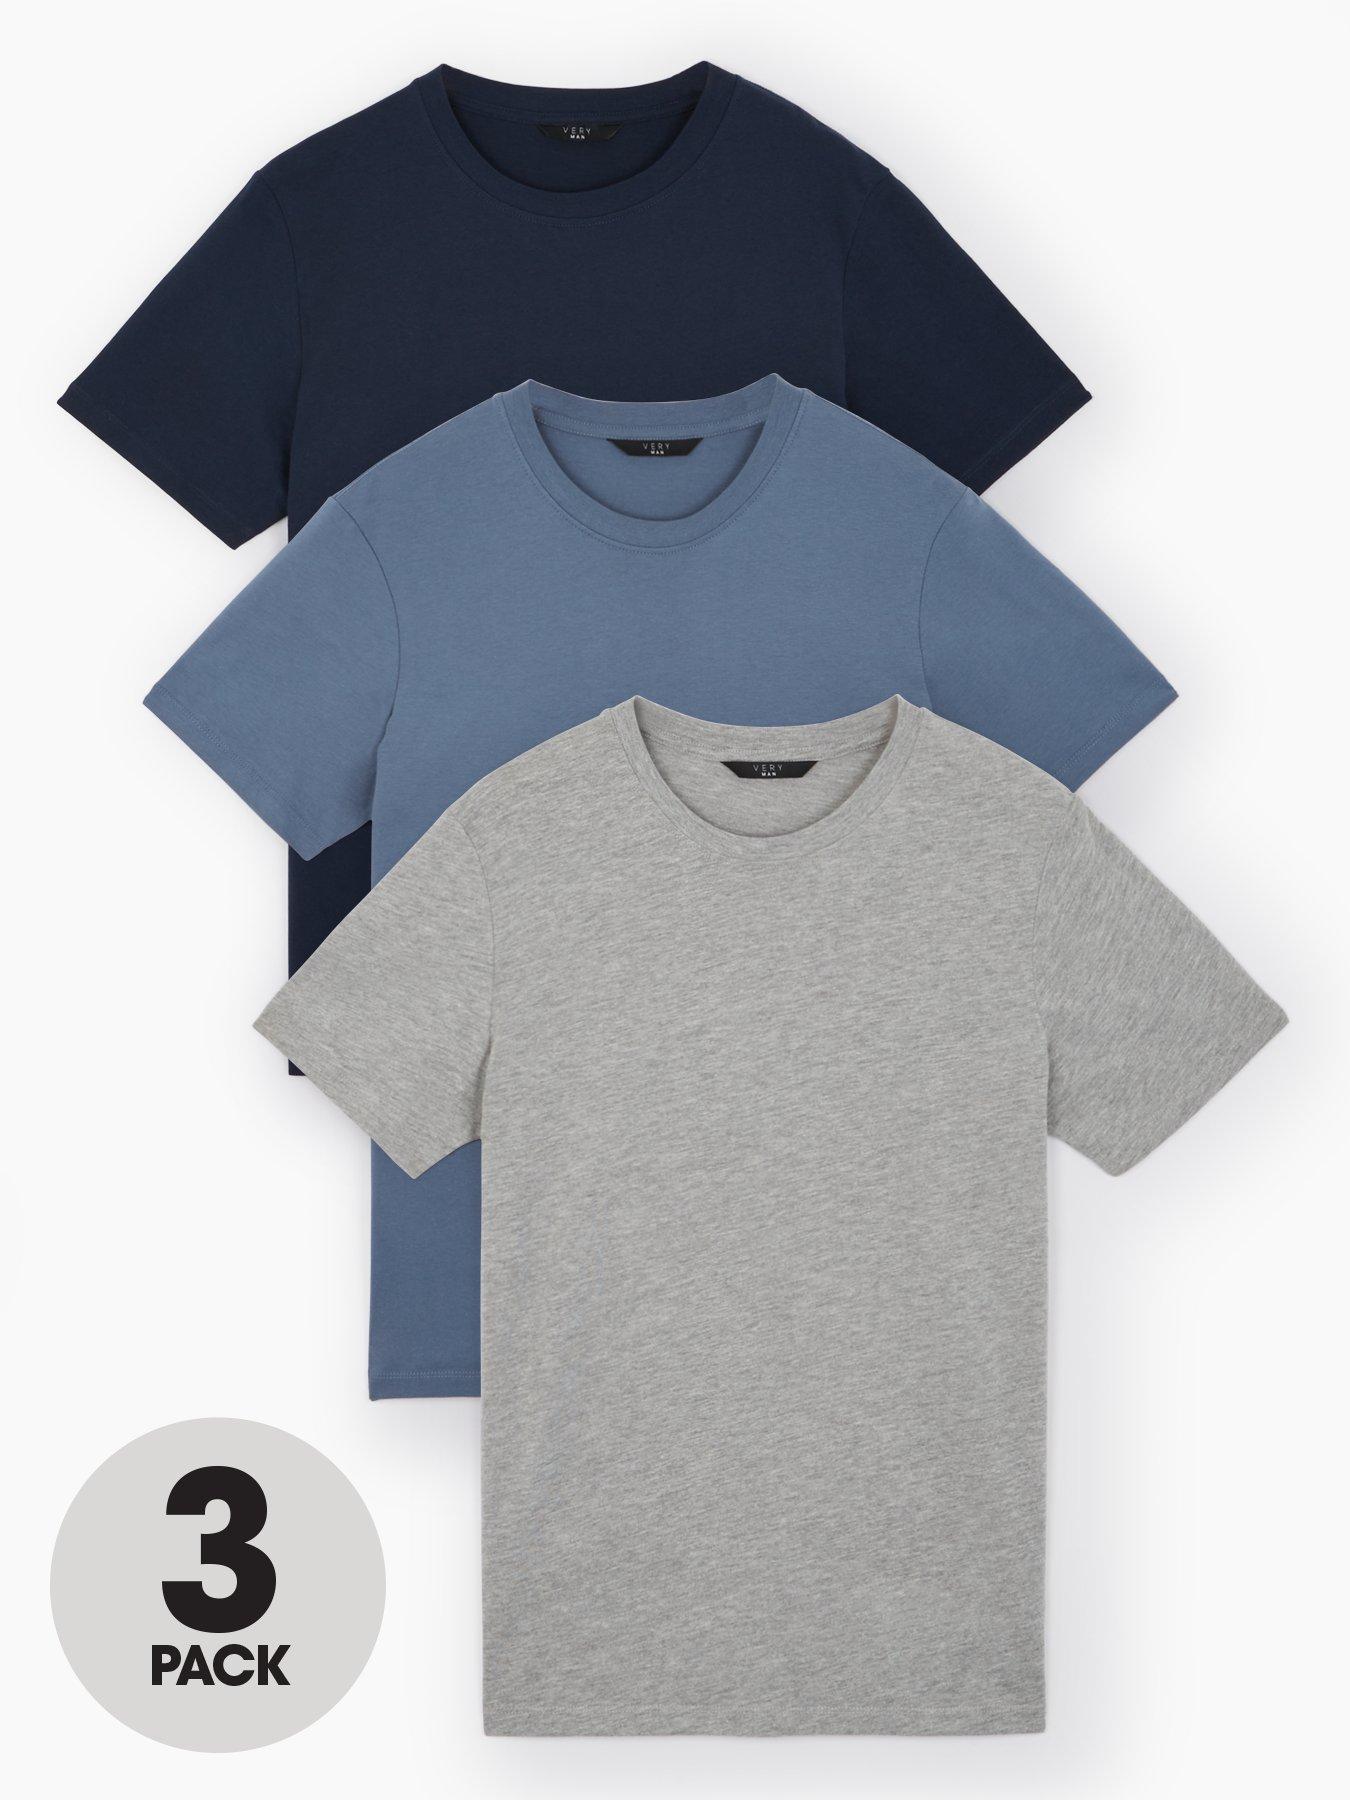 New Balance T-shirt discount 69% Navy Blue M MEN FASHION Shirts & T-shirts Sports 